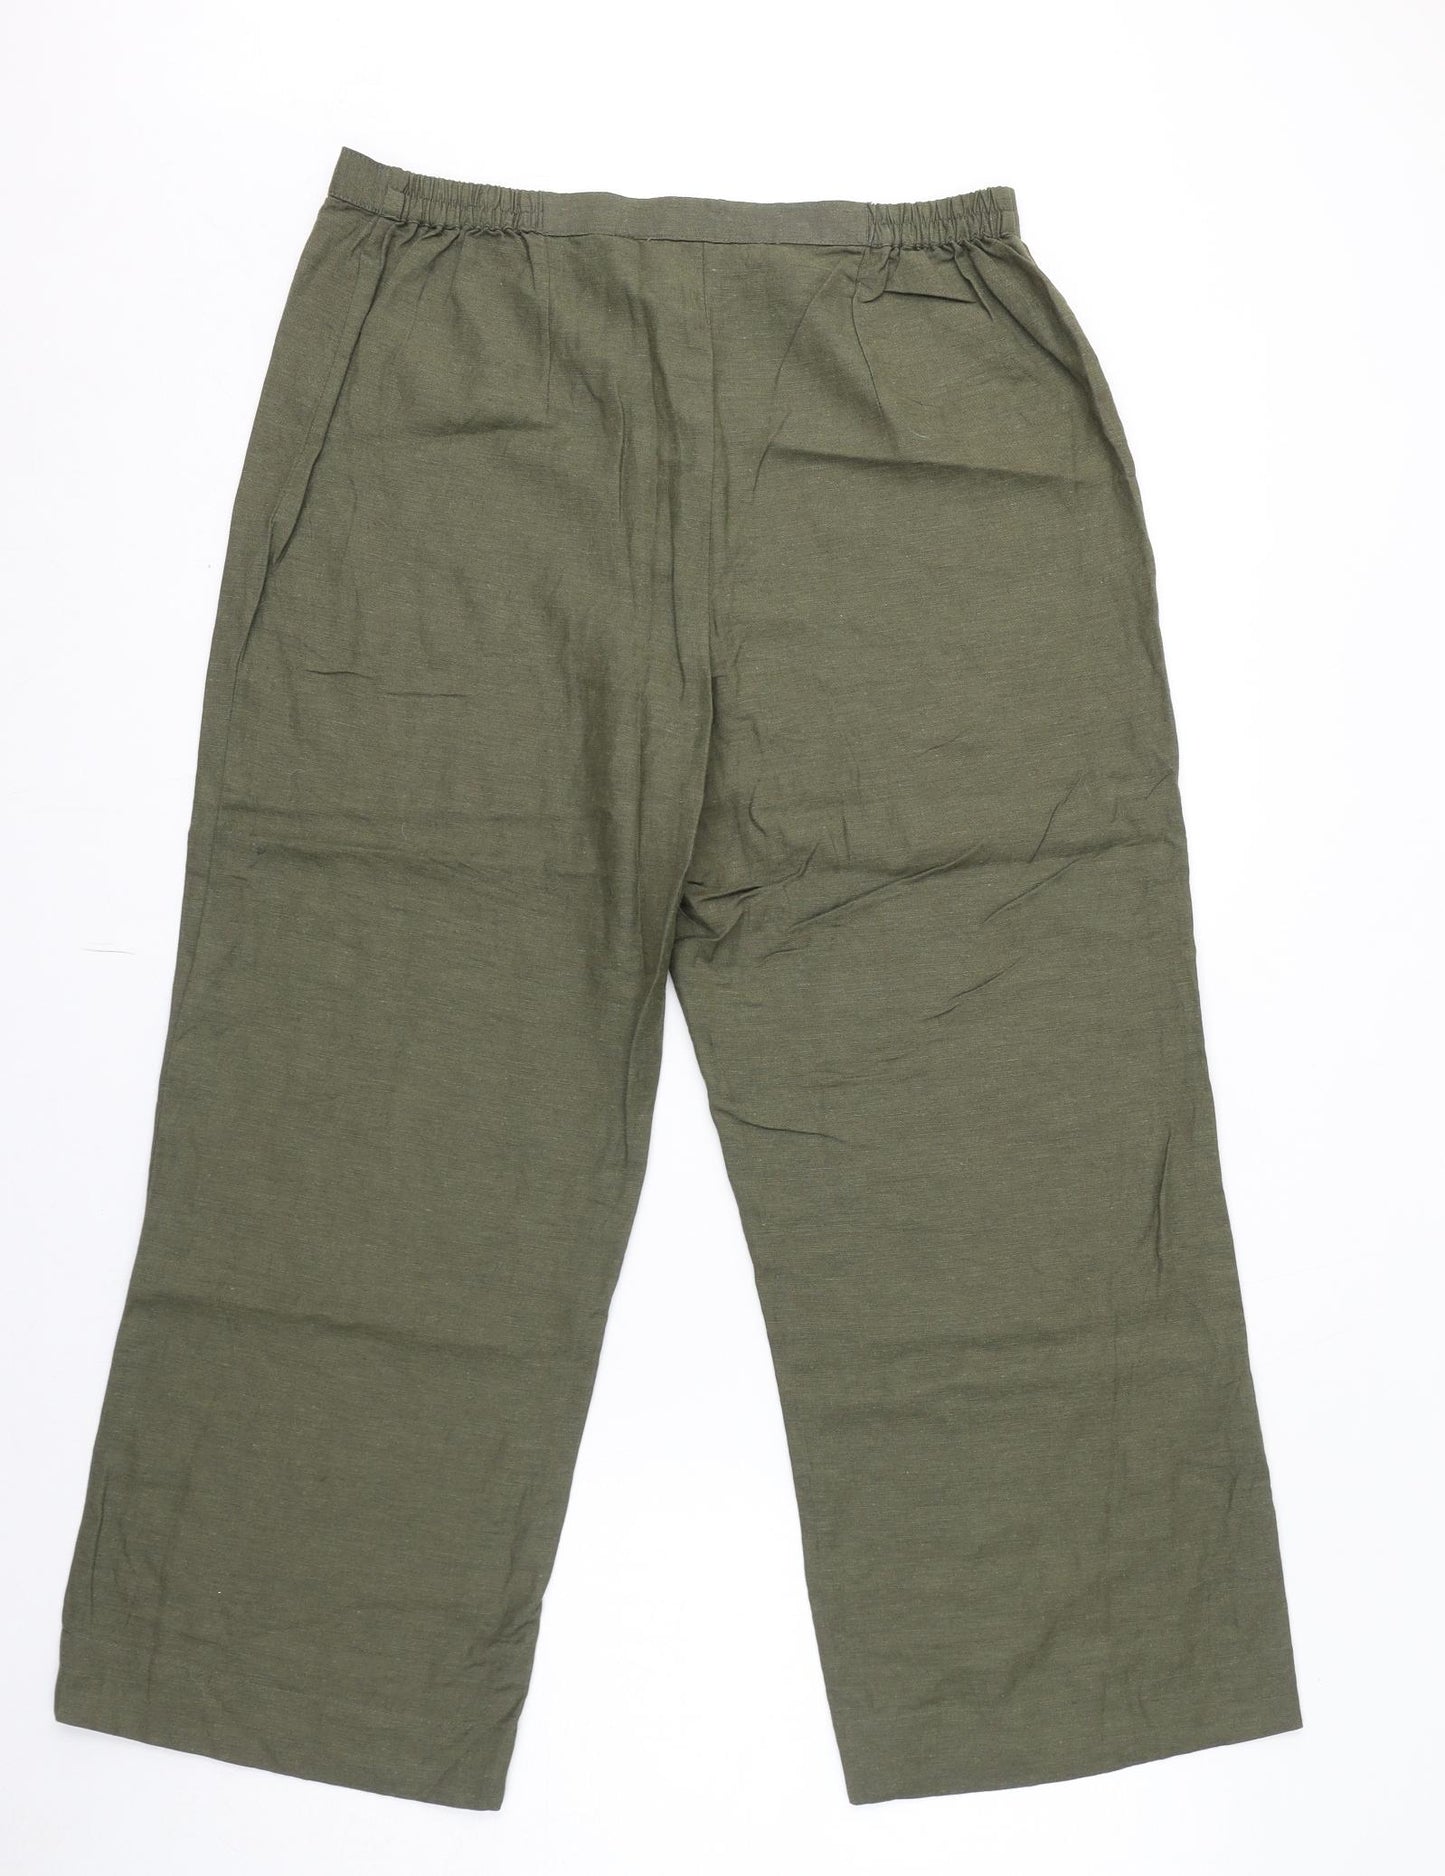 Joanna Hope Womens Green Viscose Trousers Size 14 L26 in Regular Zip